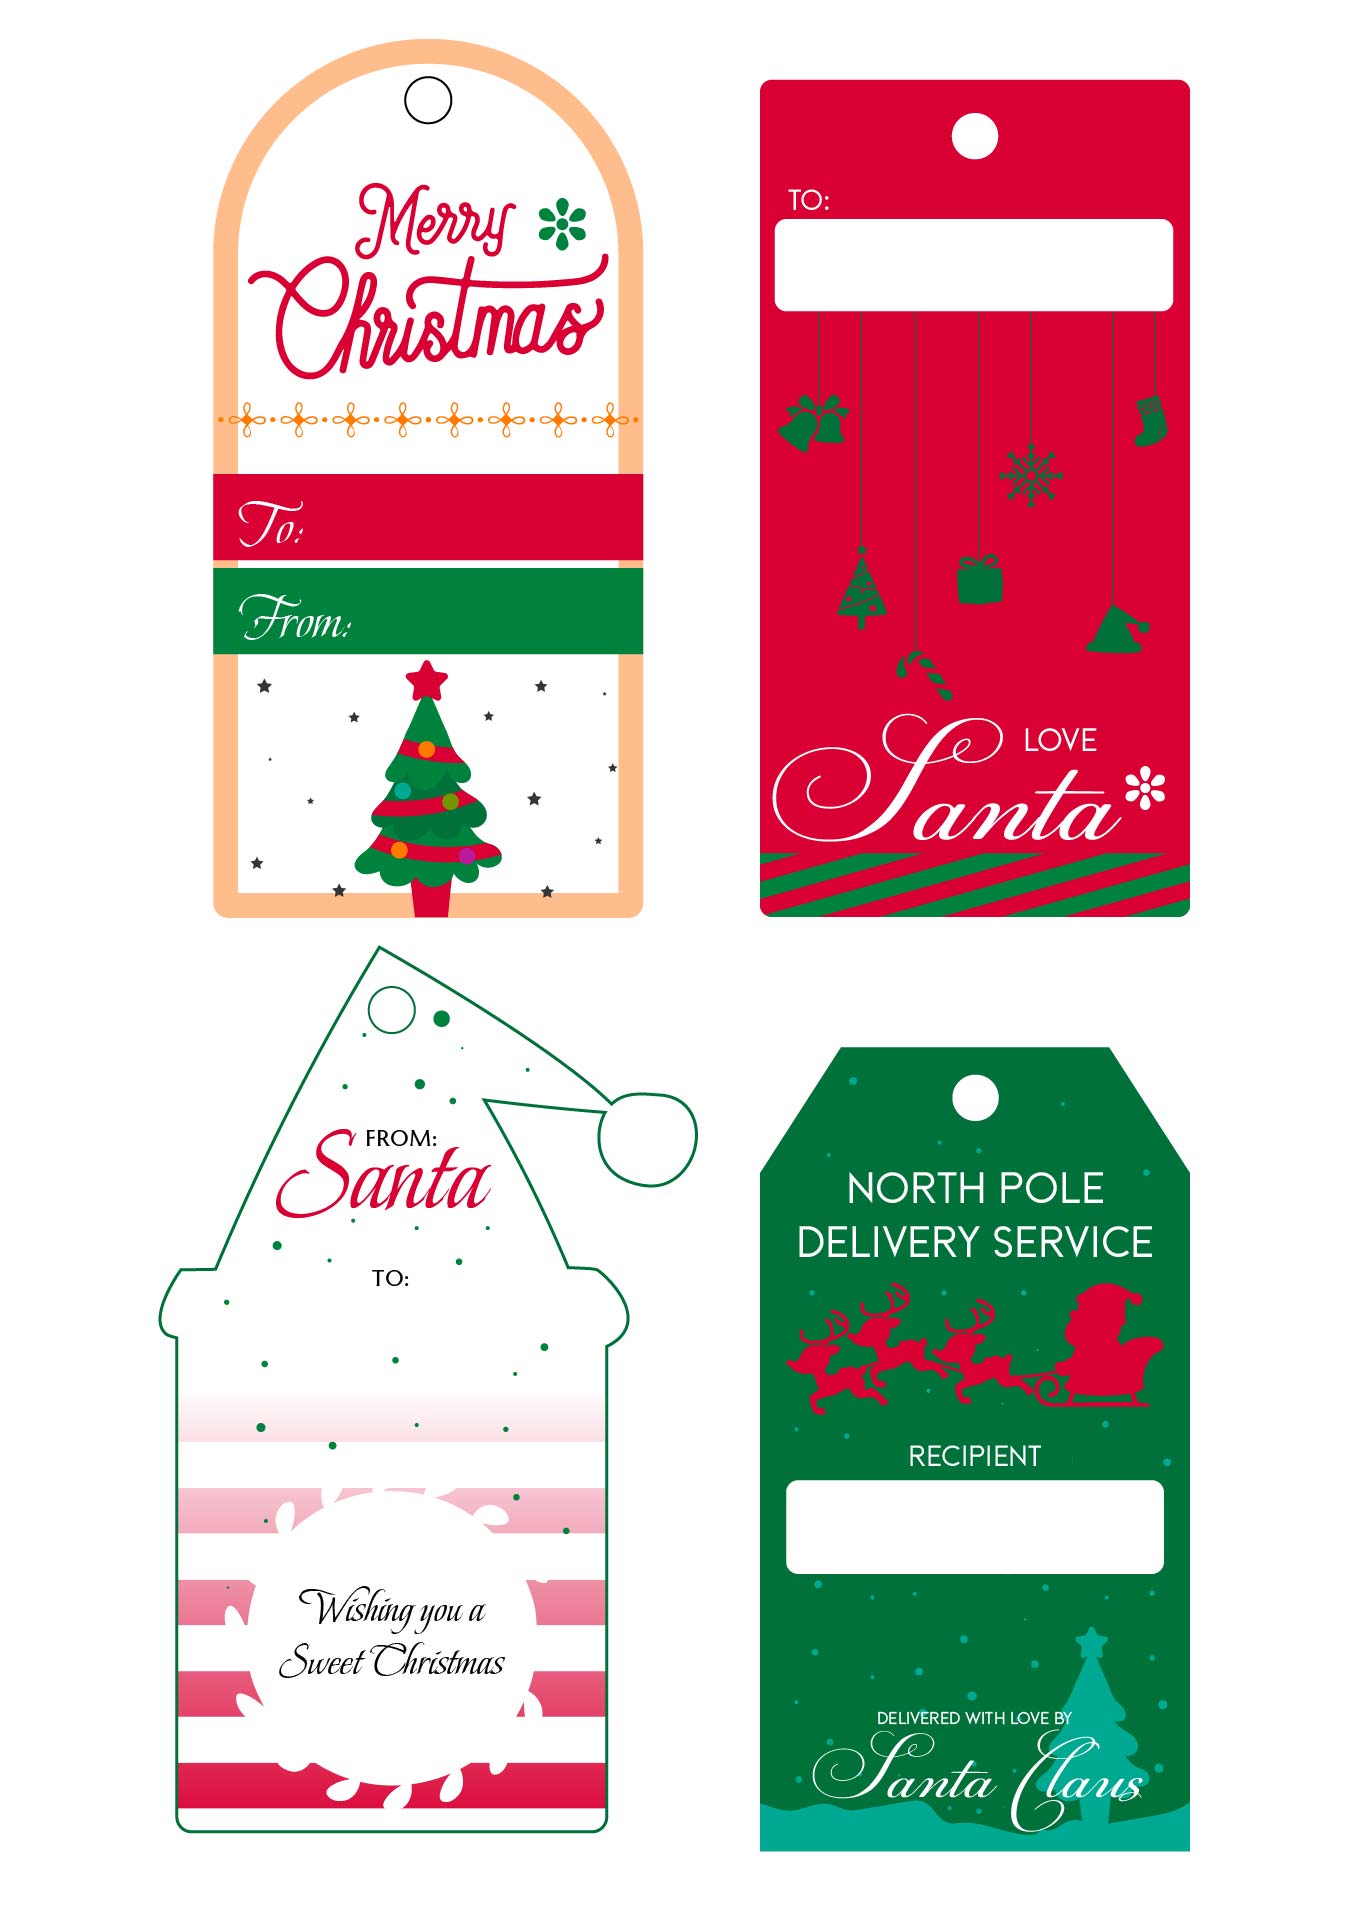 Printable Santa Gift Tags